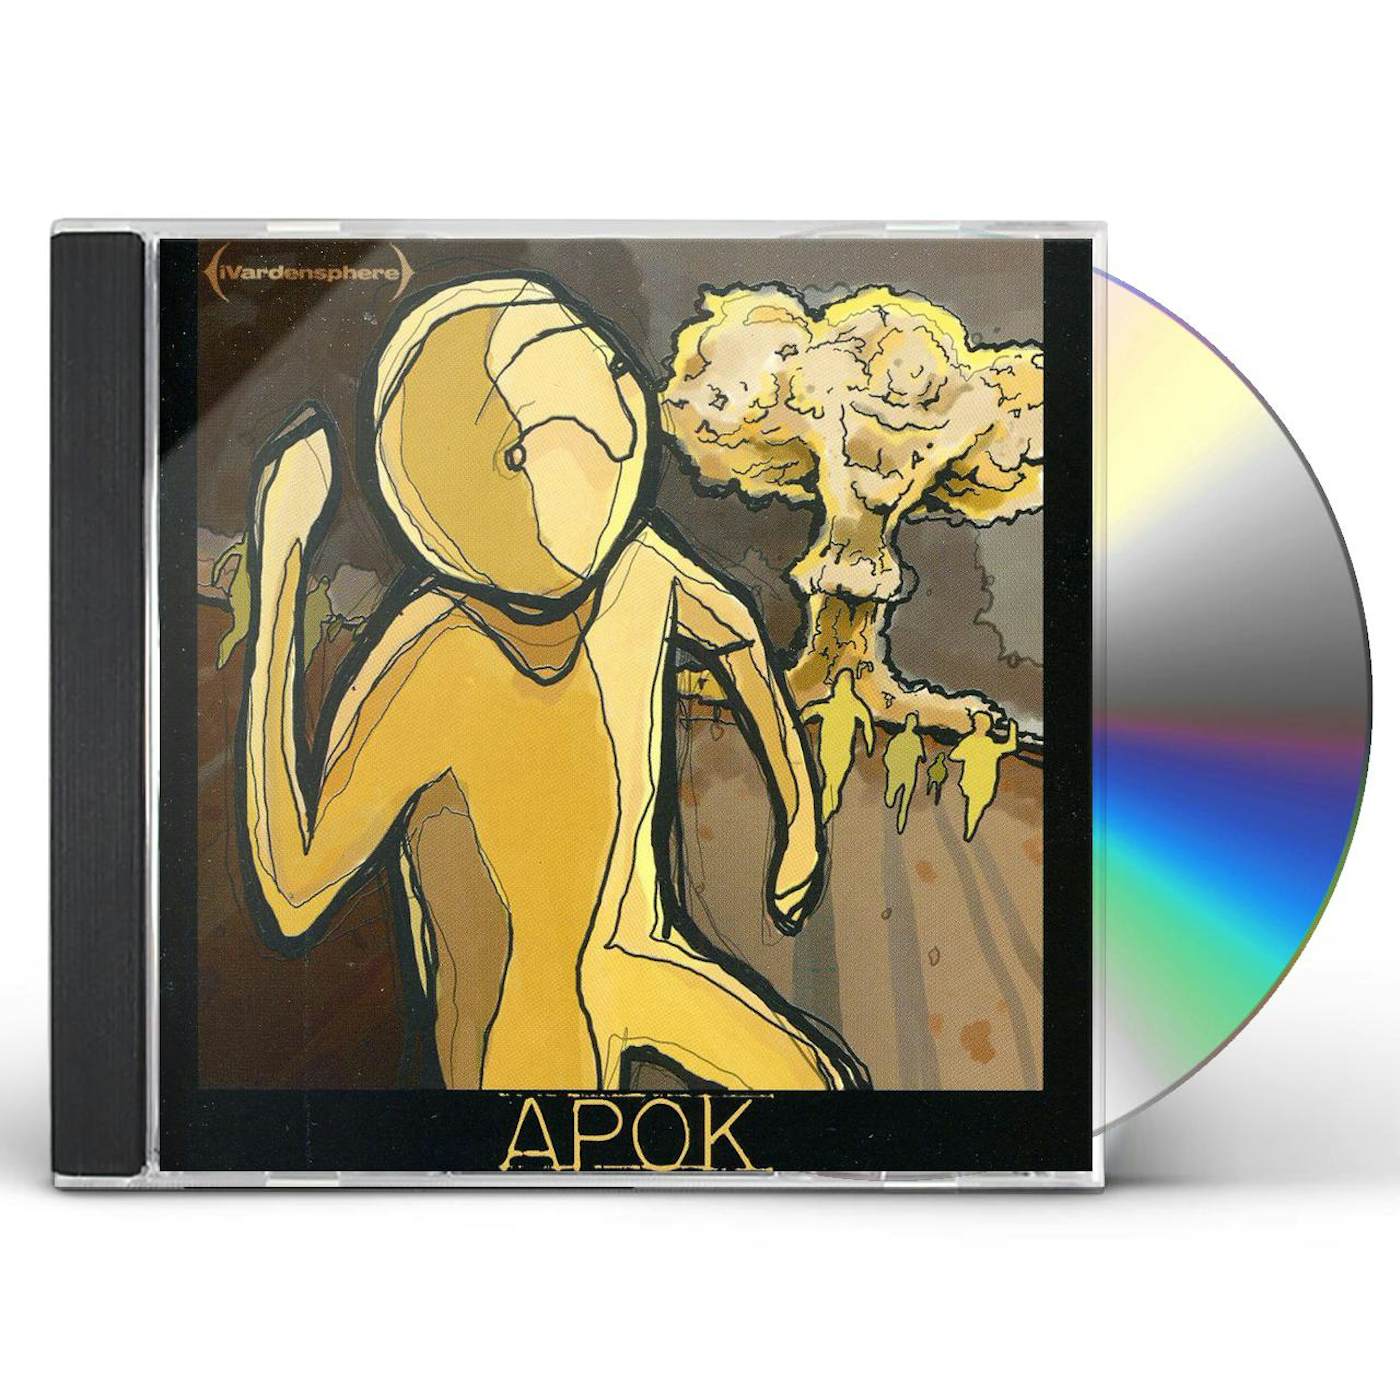 iVardensphere APOK CD